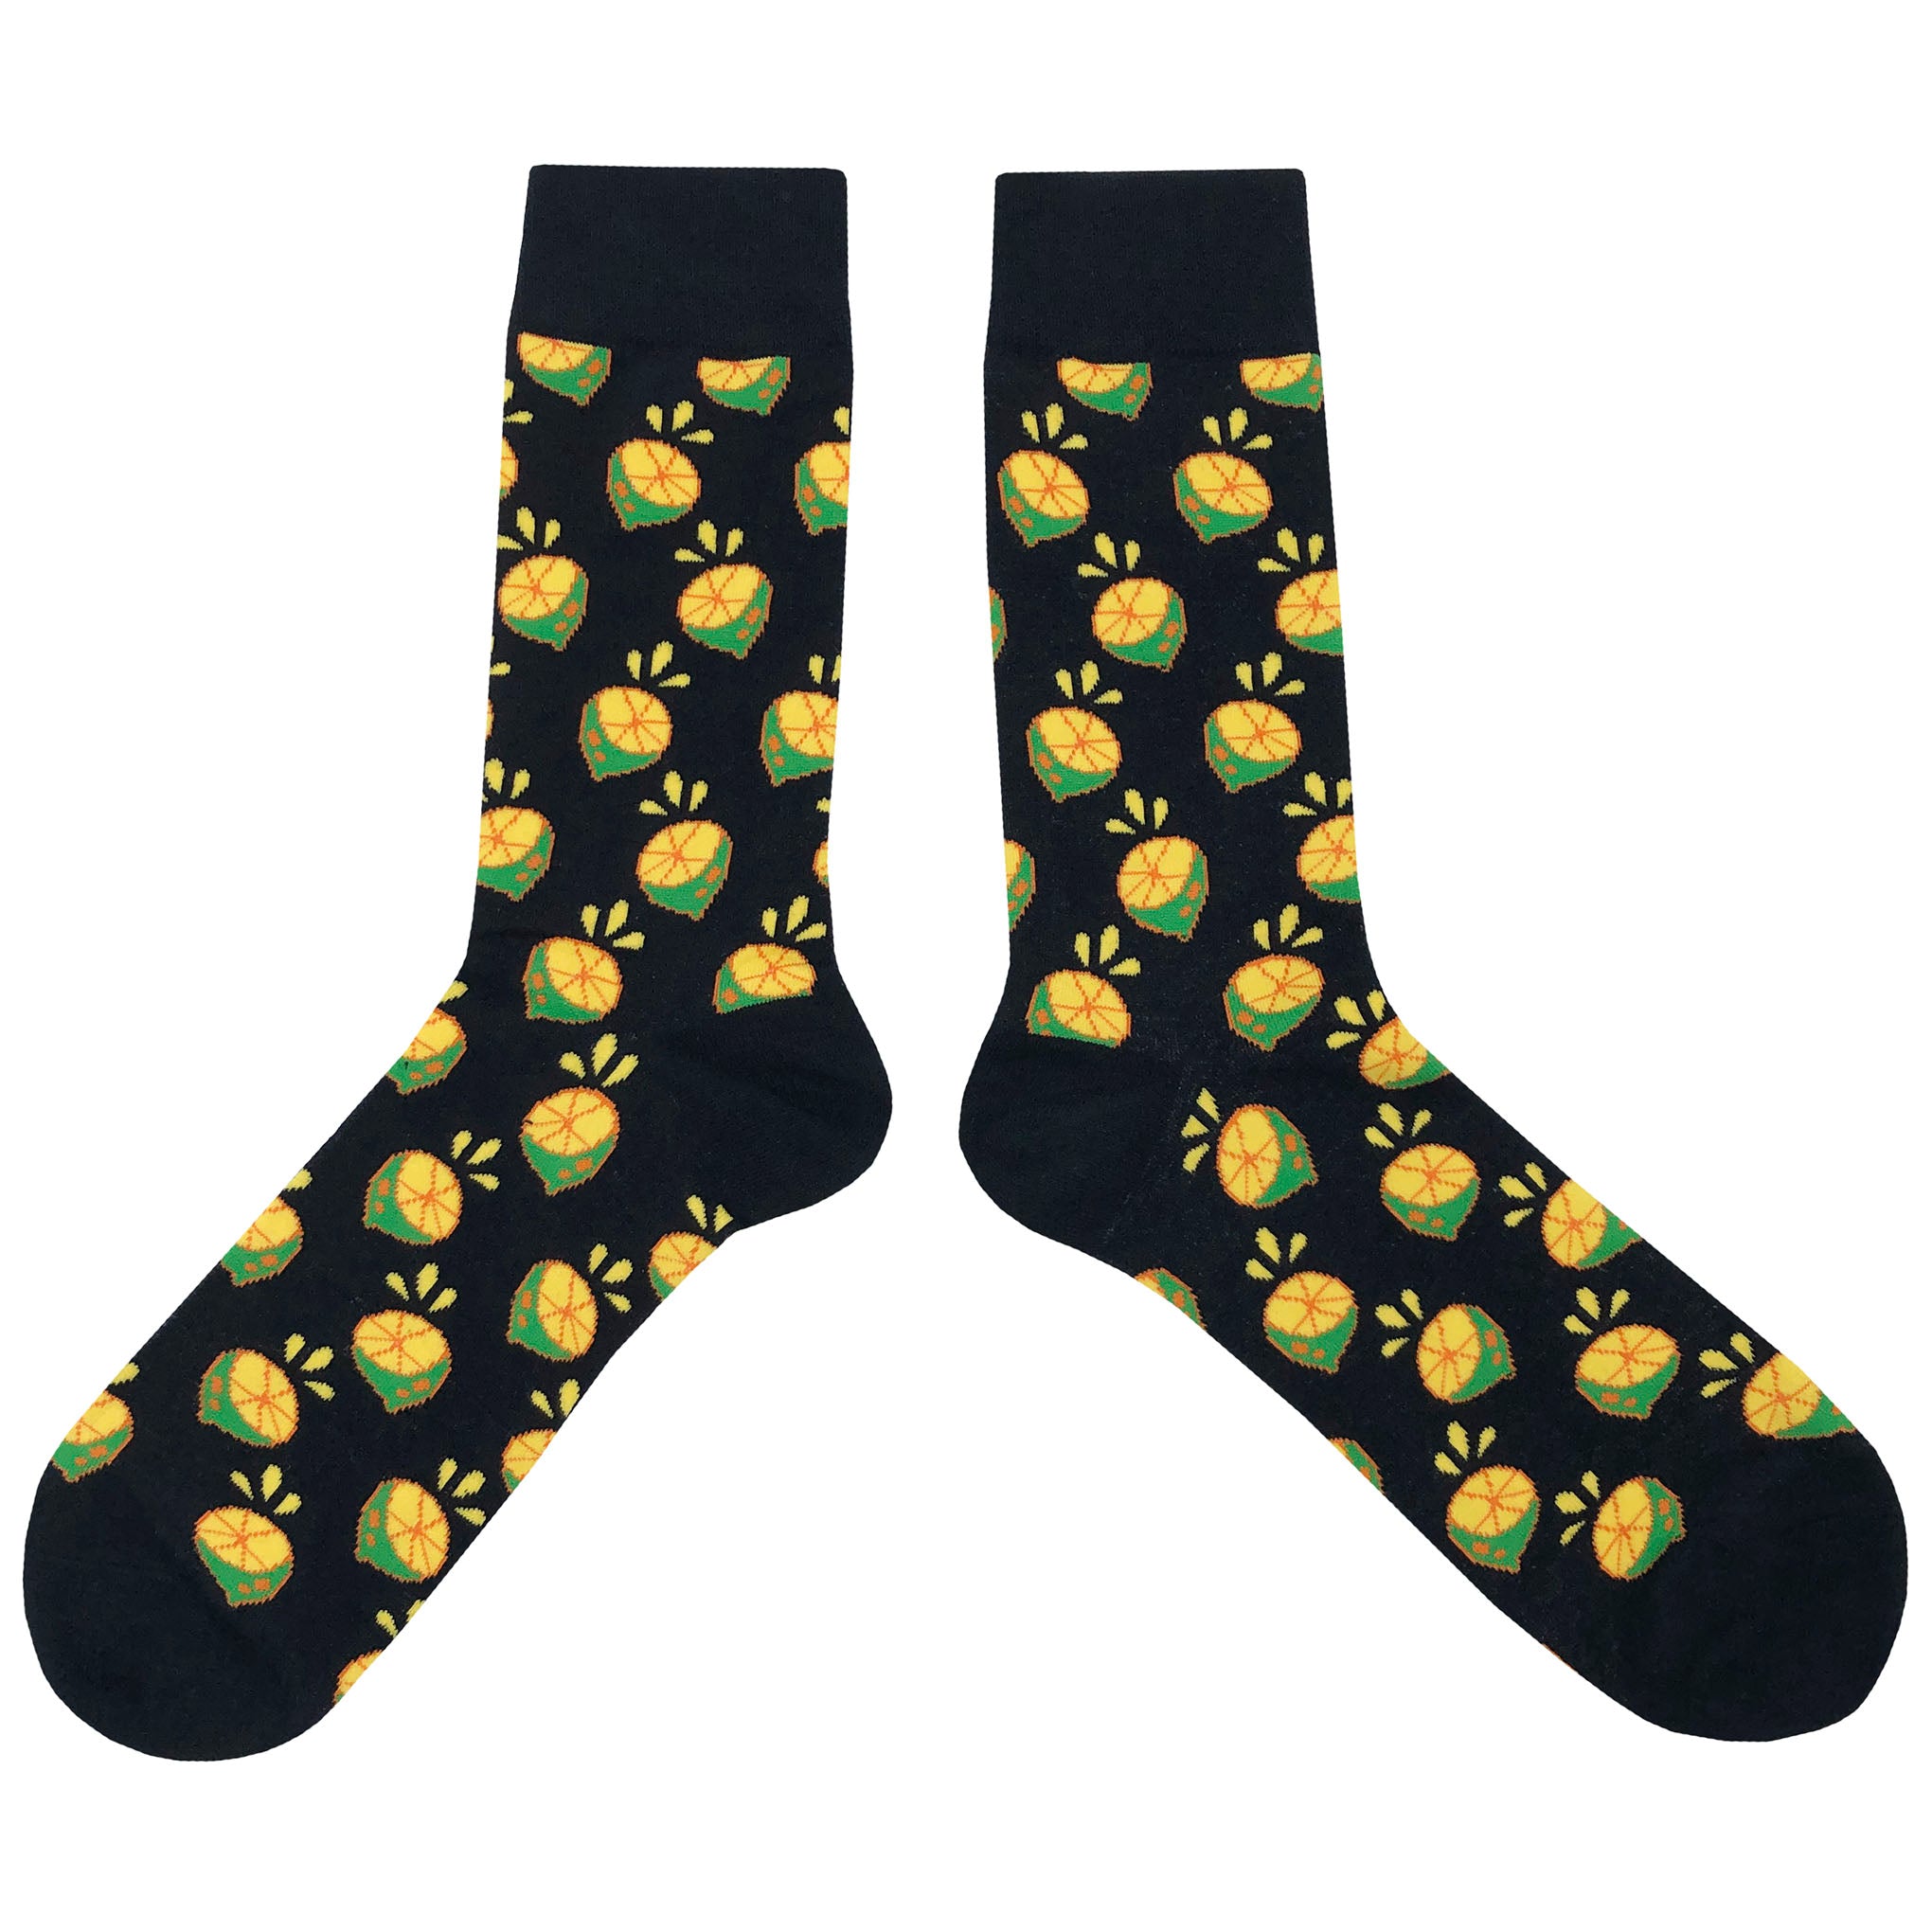 Lemon Lime Socks - Fun and Crazy Socks at Sockfly.com